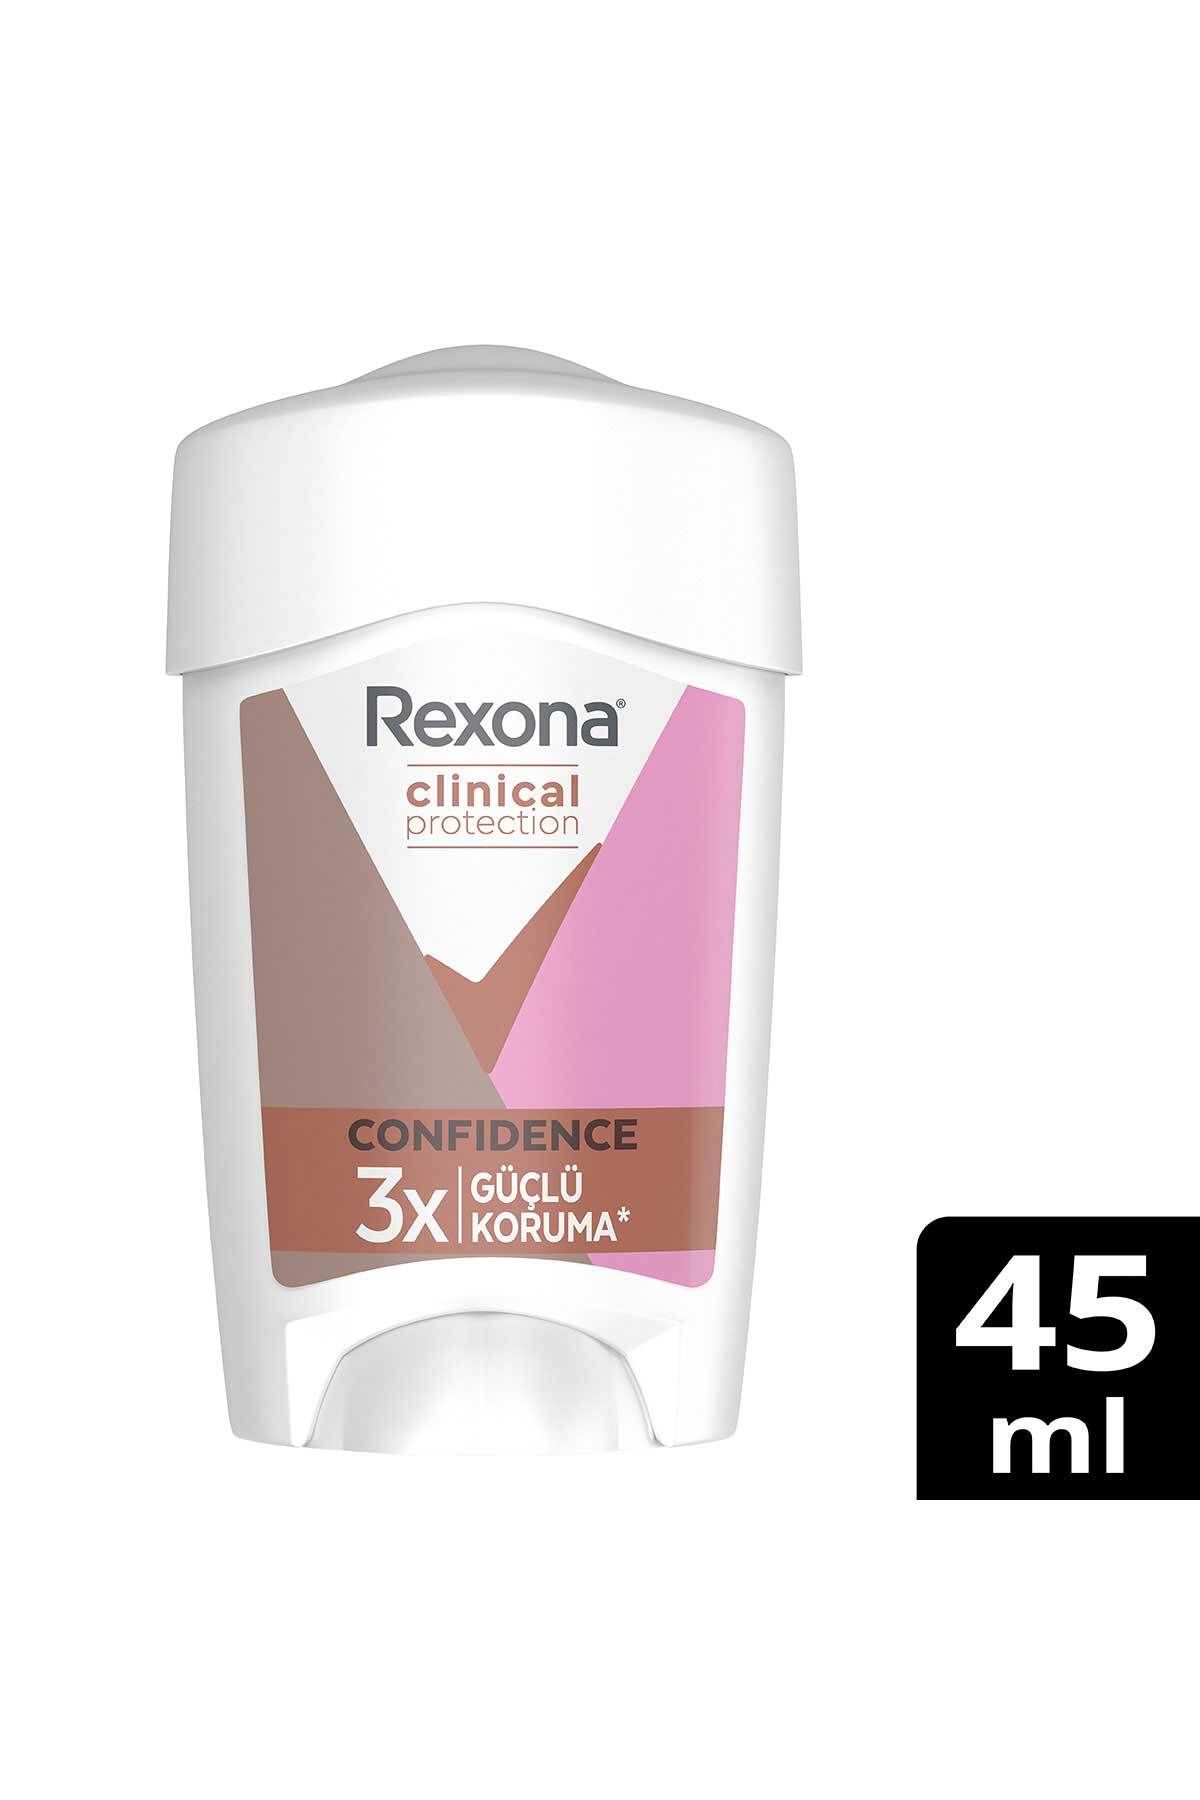 Rexona Clinical Protection Kadın Stick Deodorant Confidence 3x Güçlü Koruma 45 ml